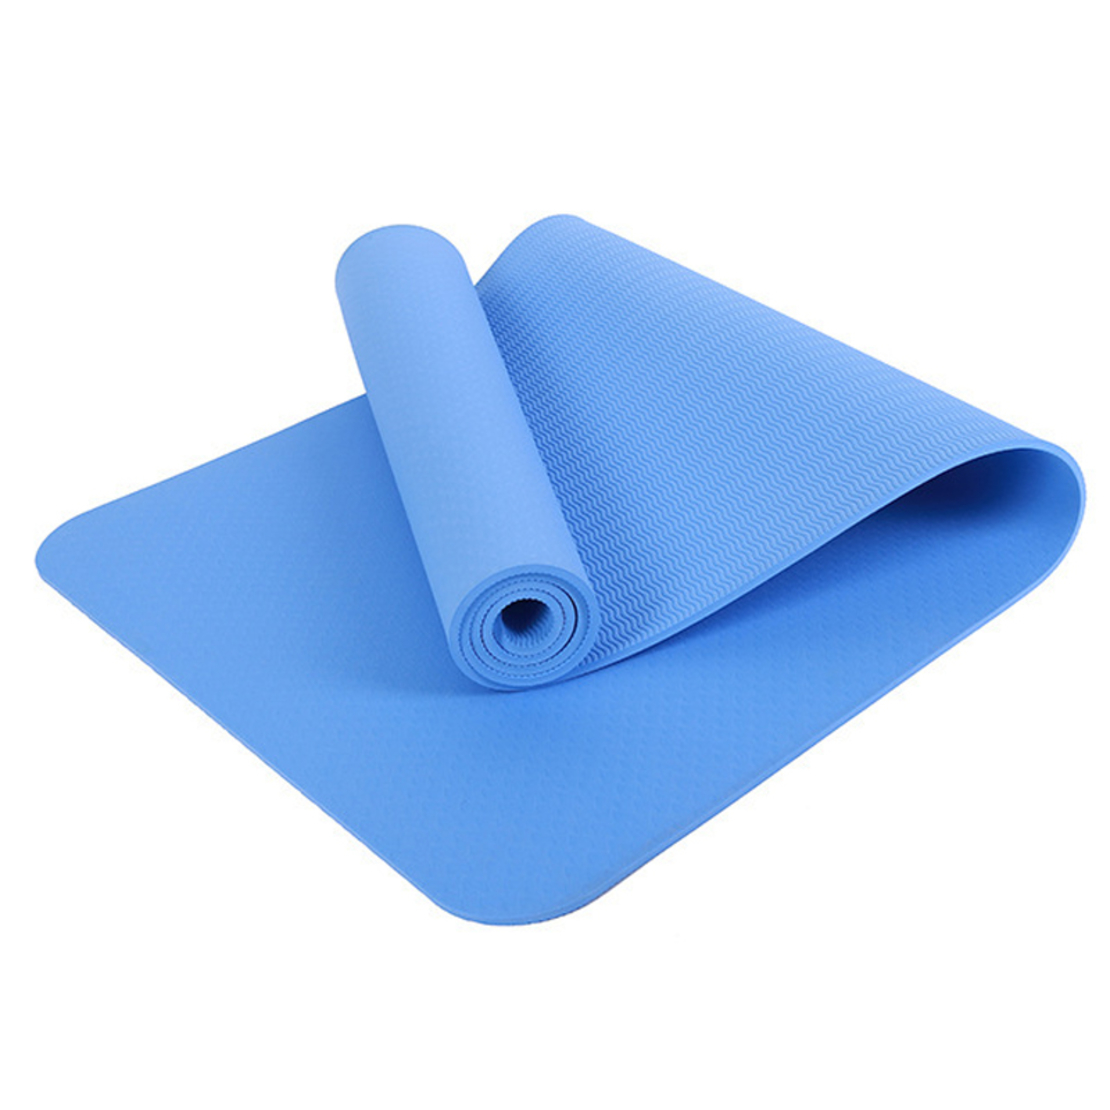 blue yoga mat 6mm